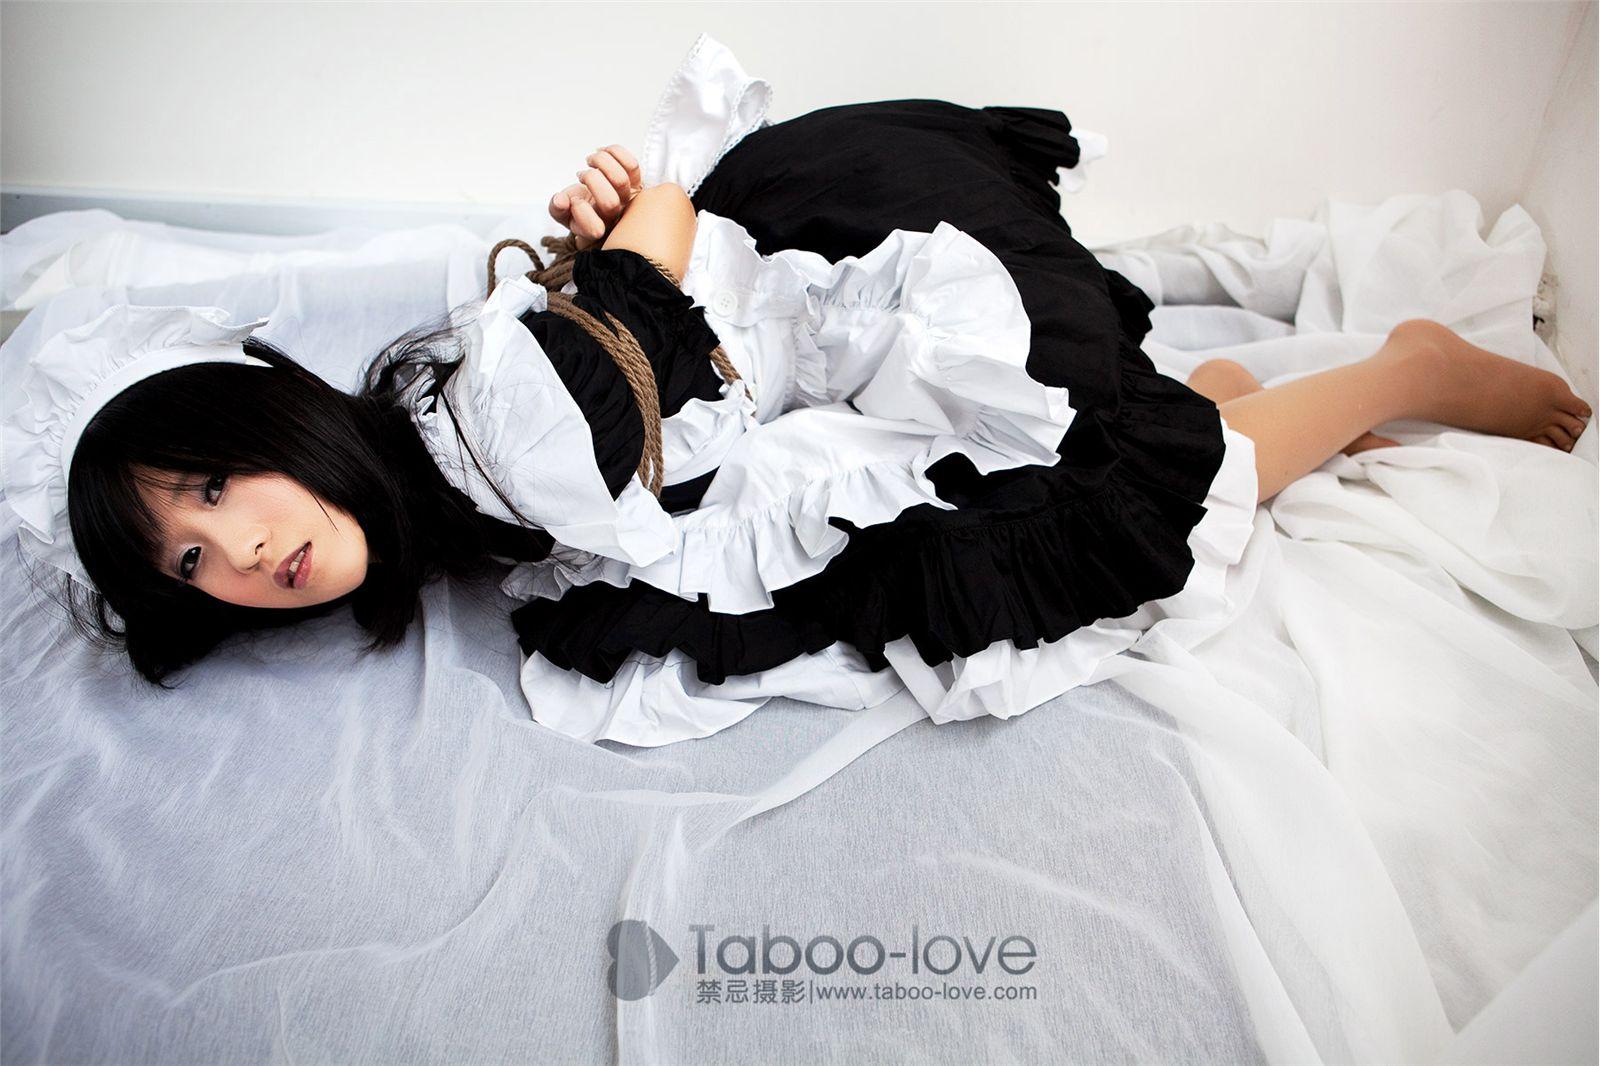 Taboo-love No.004 唯美小女仆的下午时光 - 10.jpg